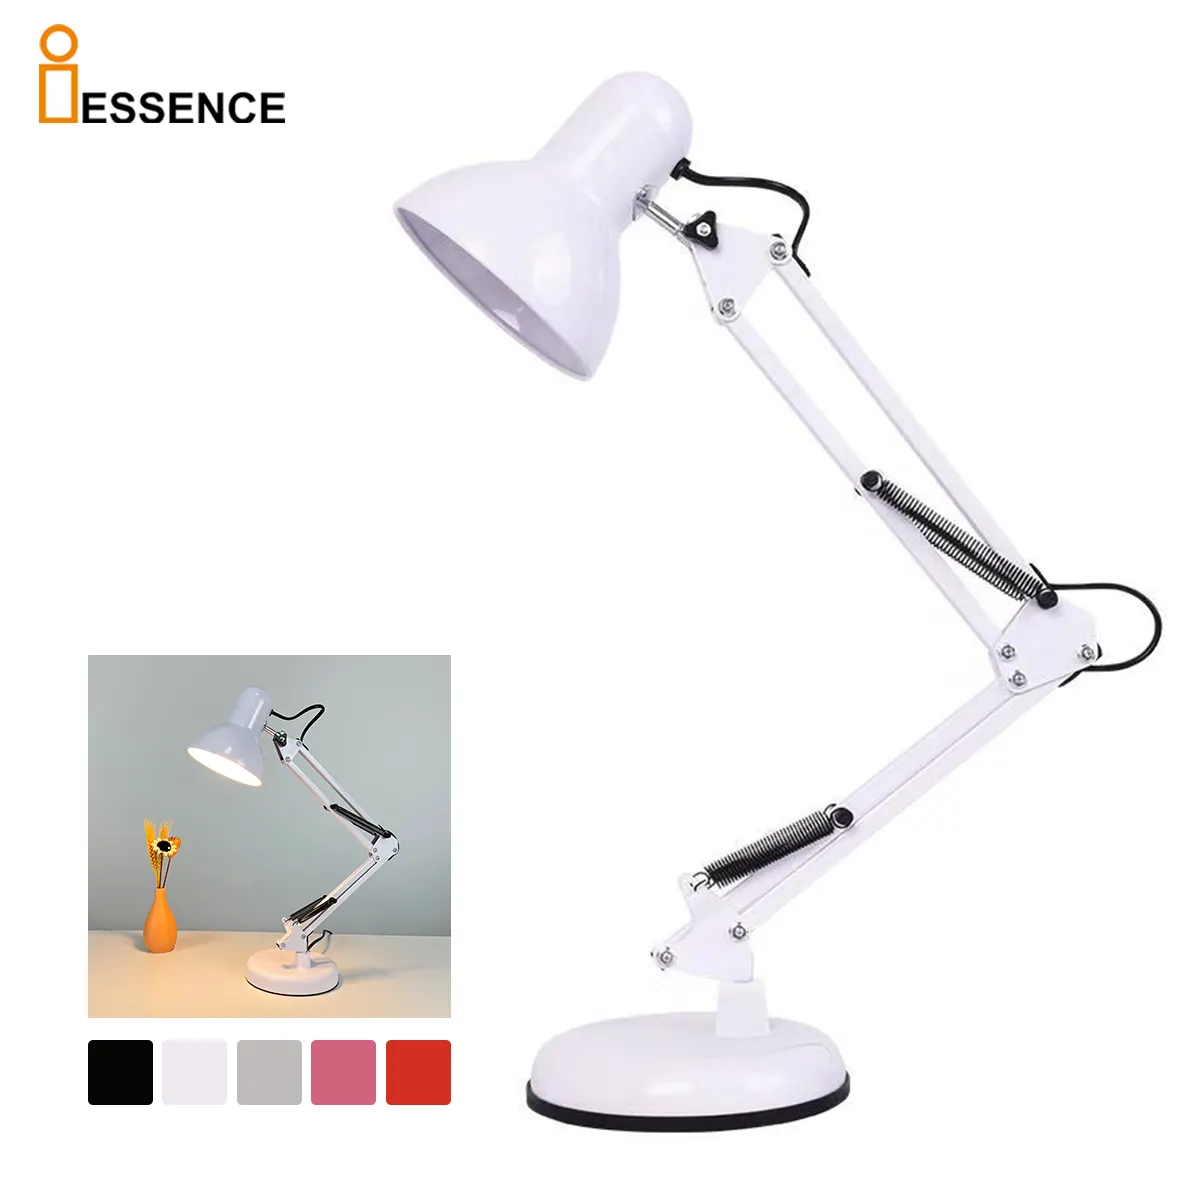 Tischleuchte Long Swing Arm Clip metal Led Table Lamp e27 silver folding Flexible Usb Bedside Office Study Work Desk Clamp Lamp